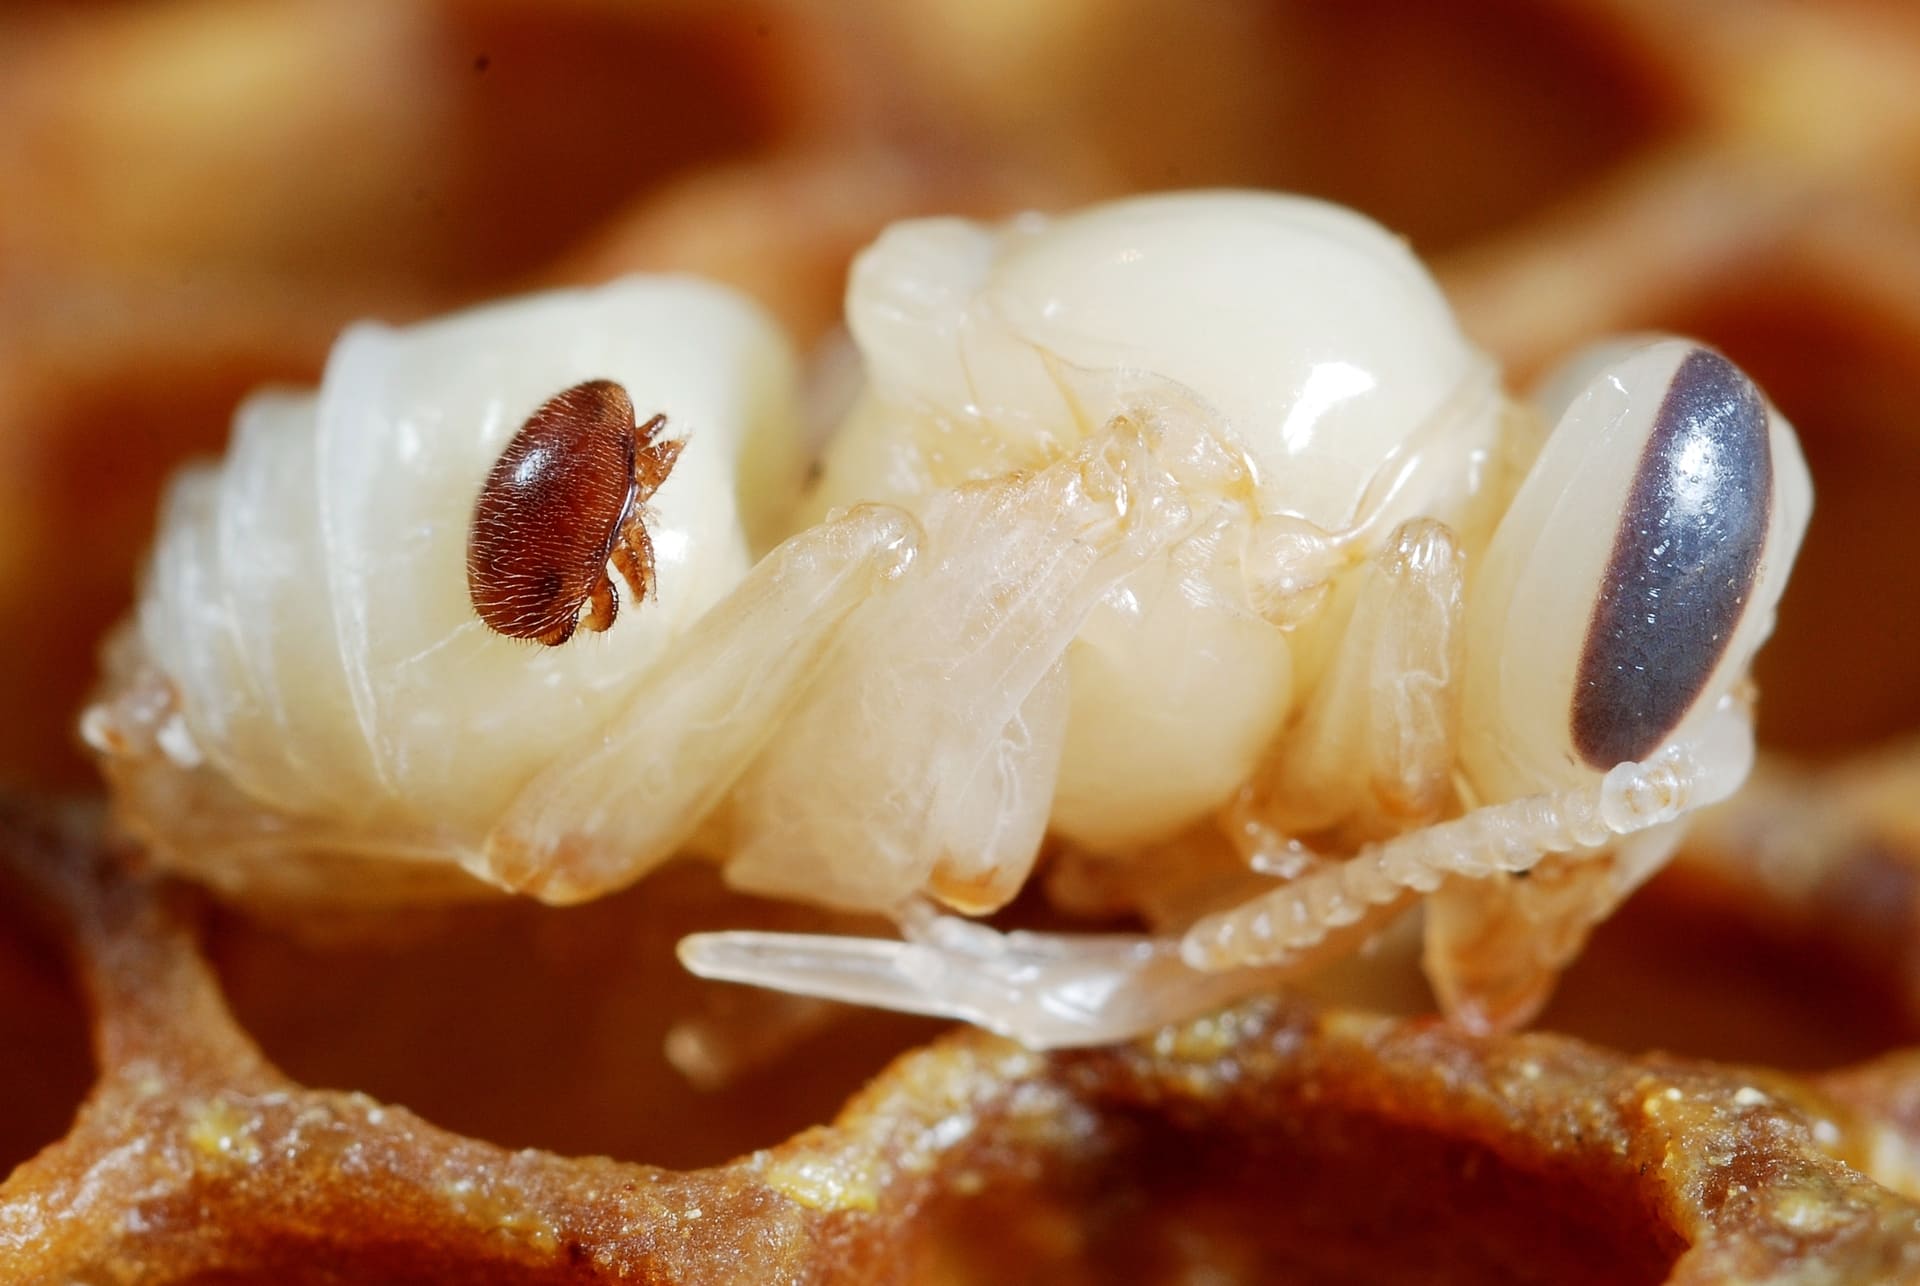 Varroa destructor parasitic mite on honey bee pupa